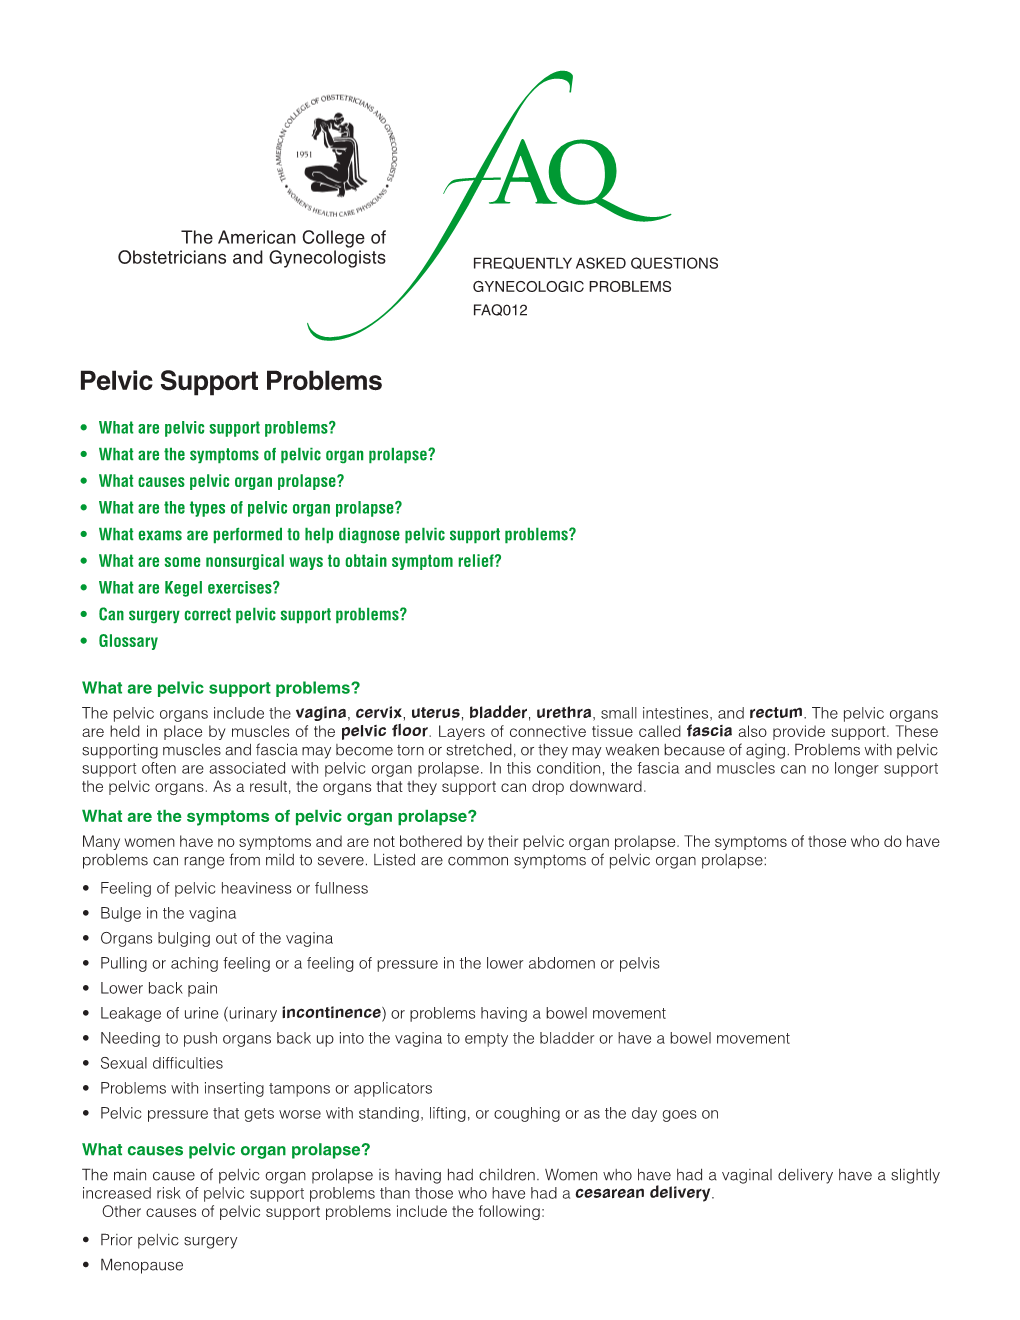 FAQ012 -- Pelvic Support Problems